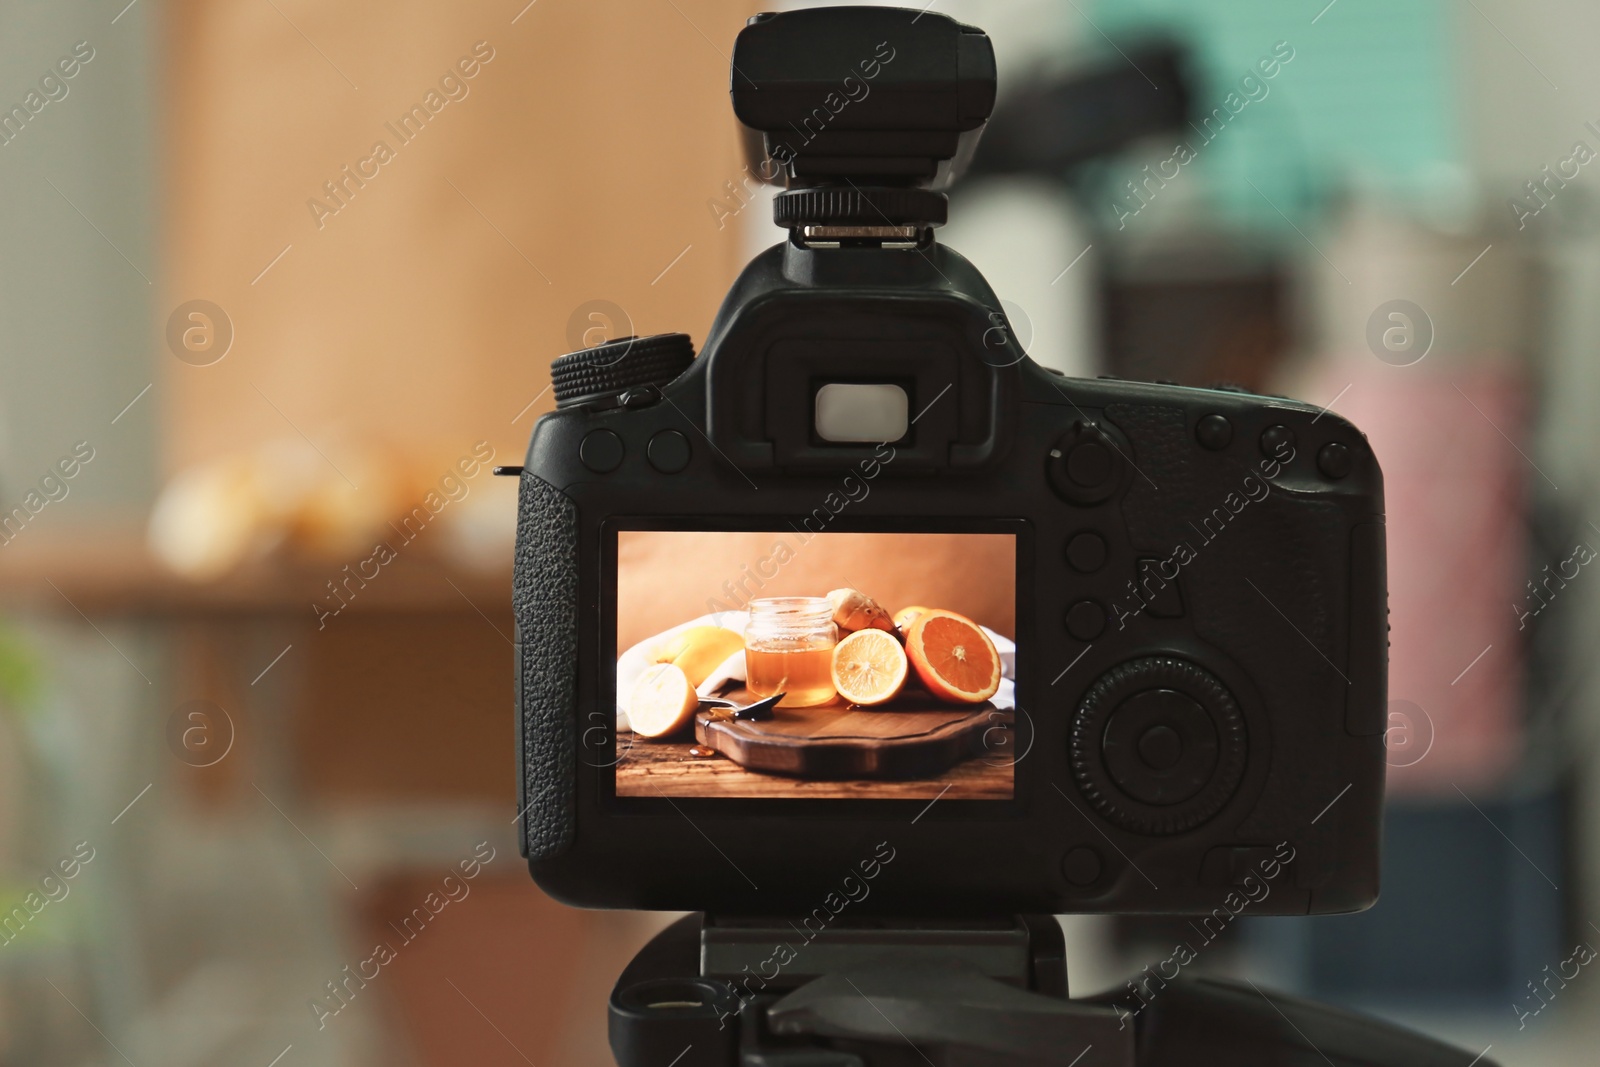 Photo of Professional camera on tripod in studio, closeup. Food photography